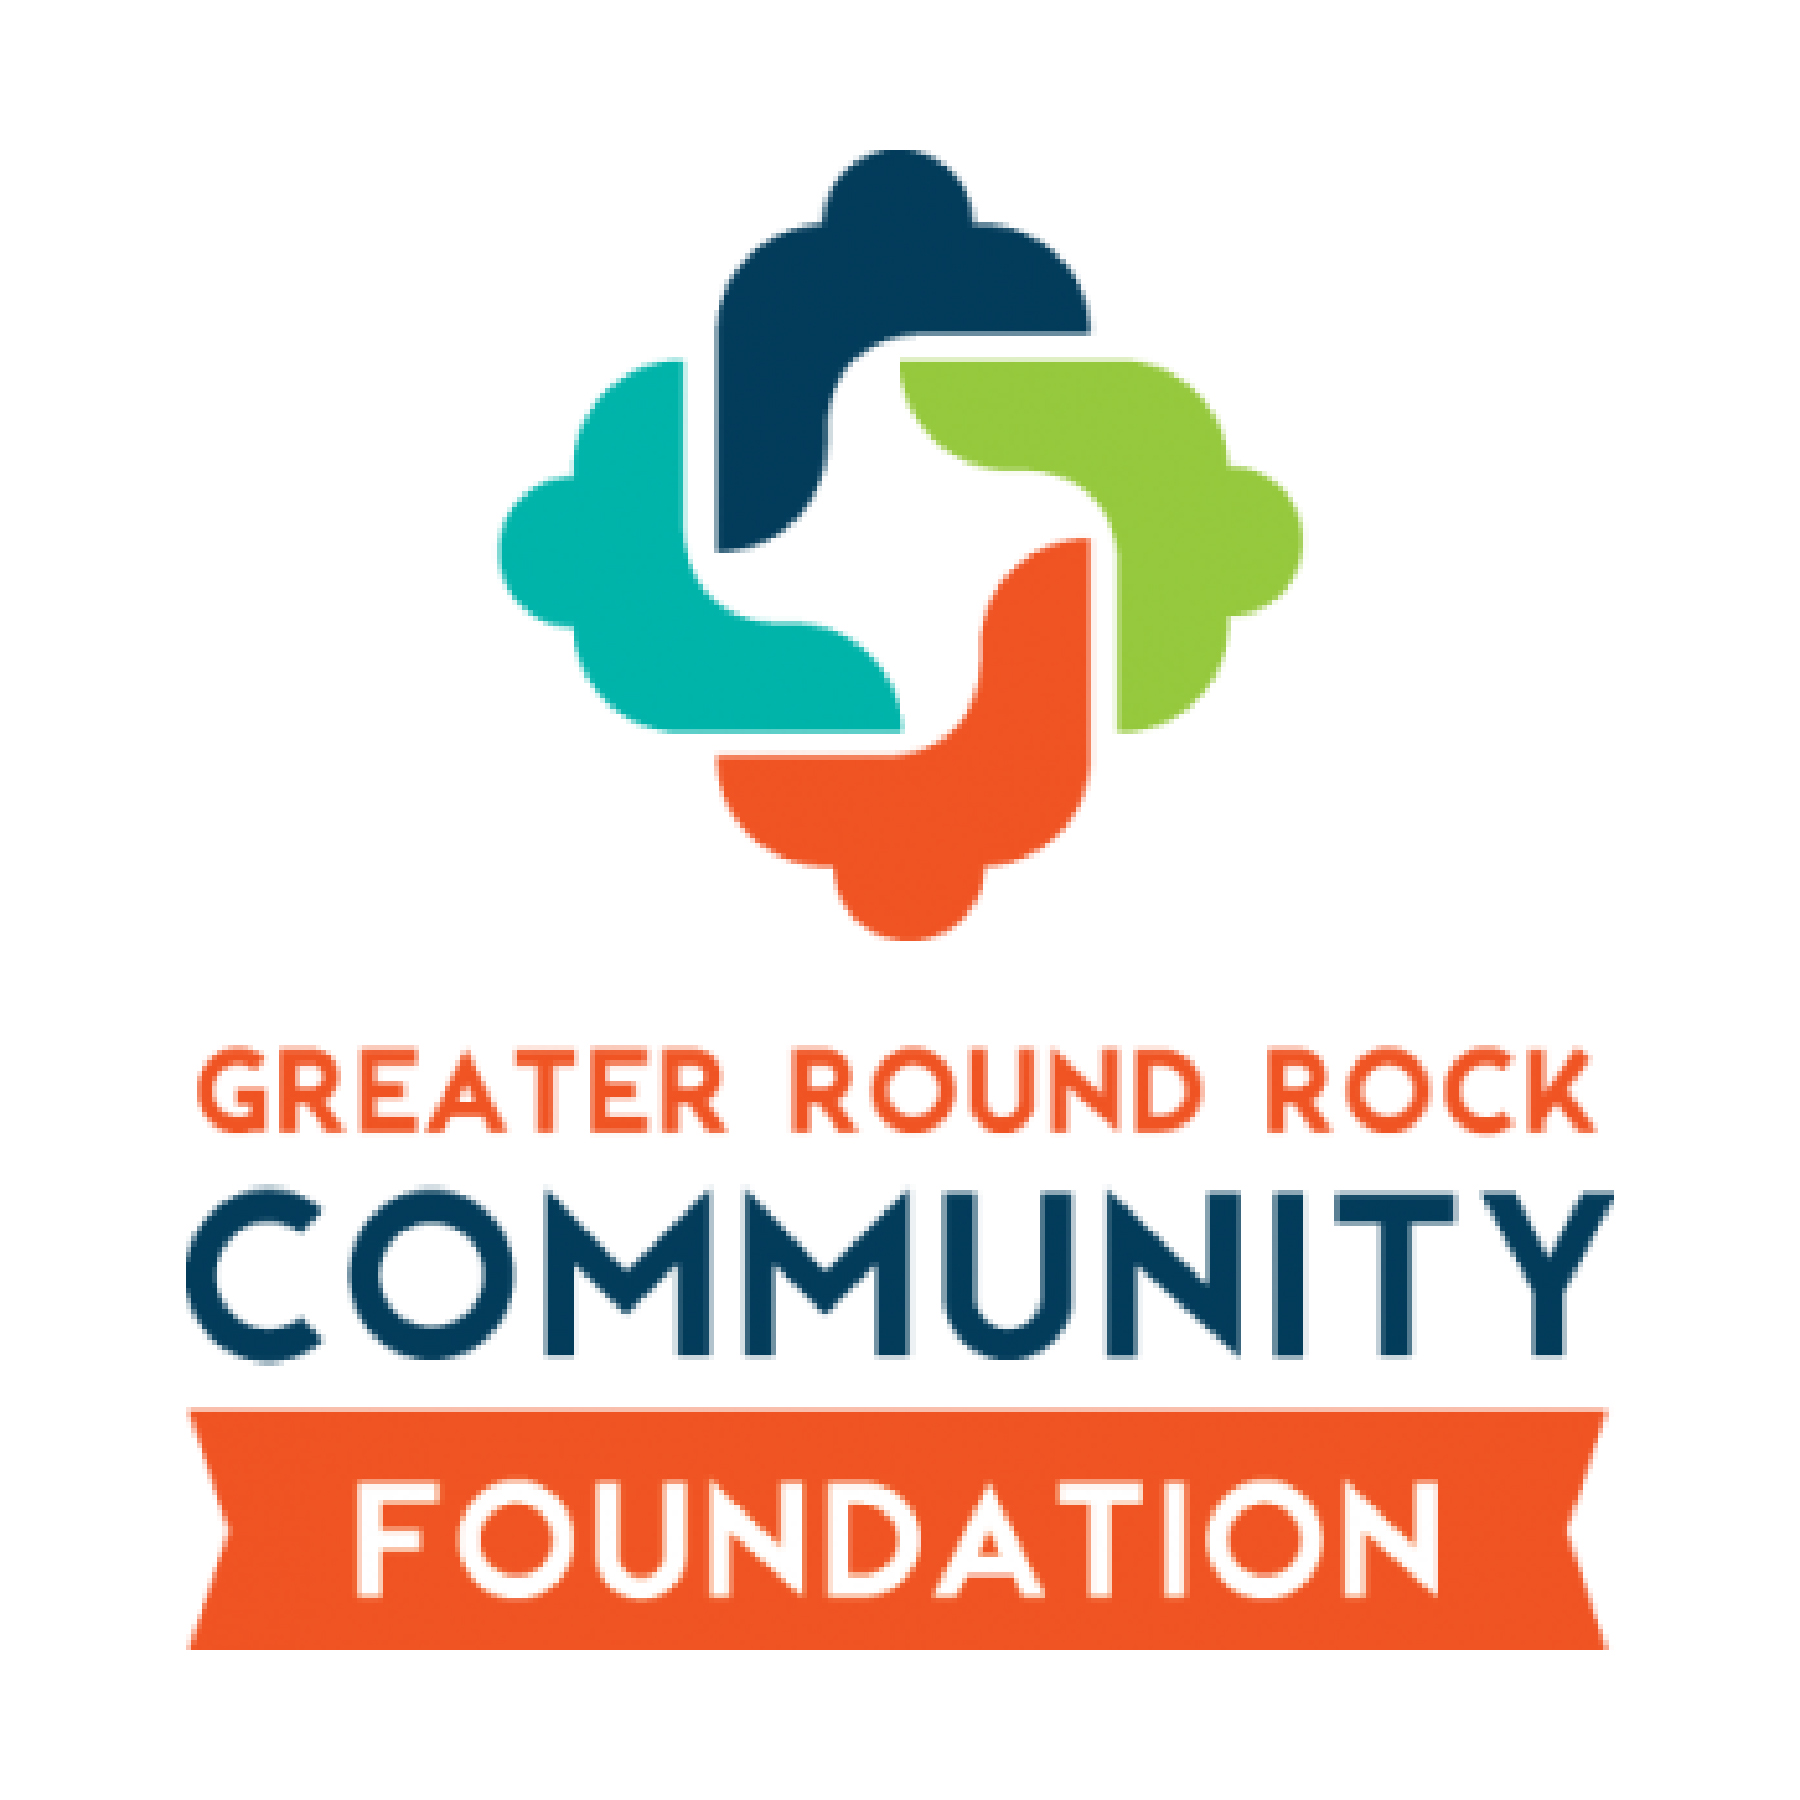 Greater Round Rock Community Foundation logo